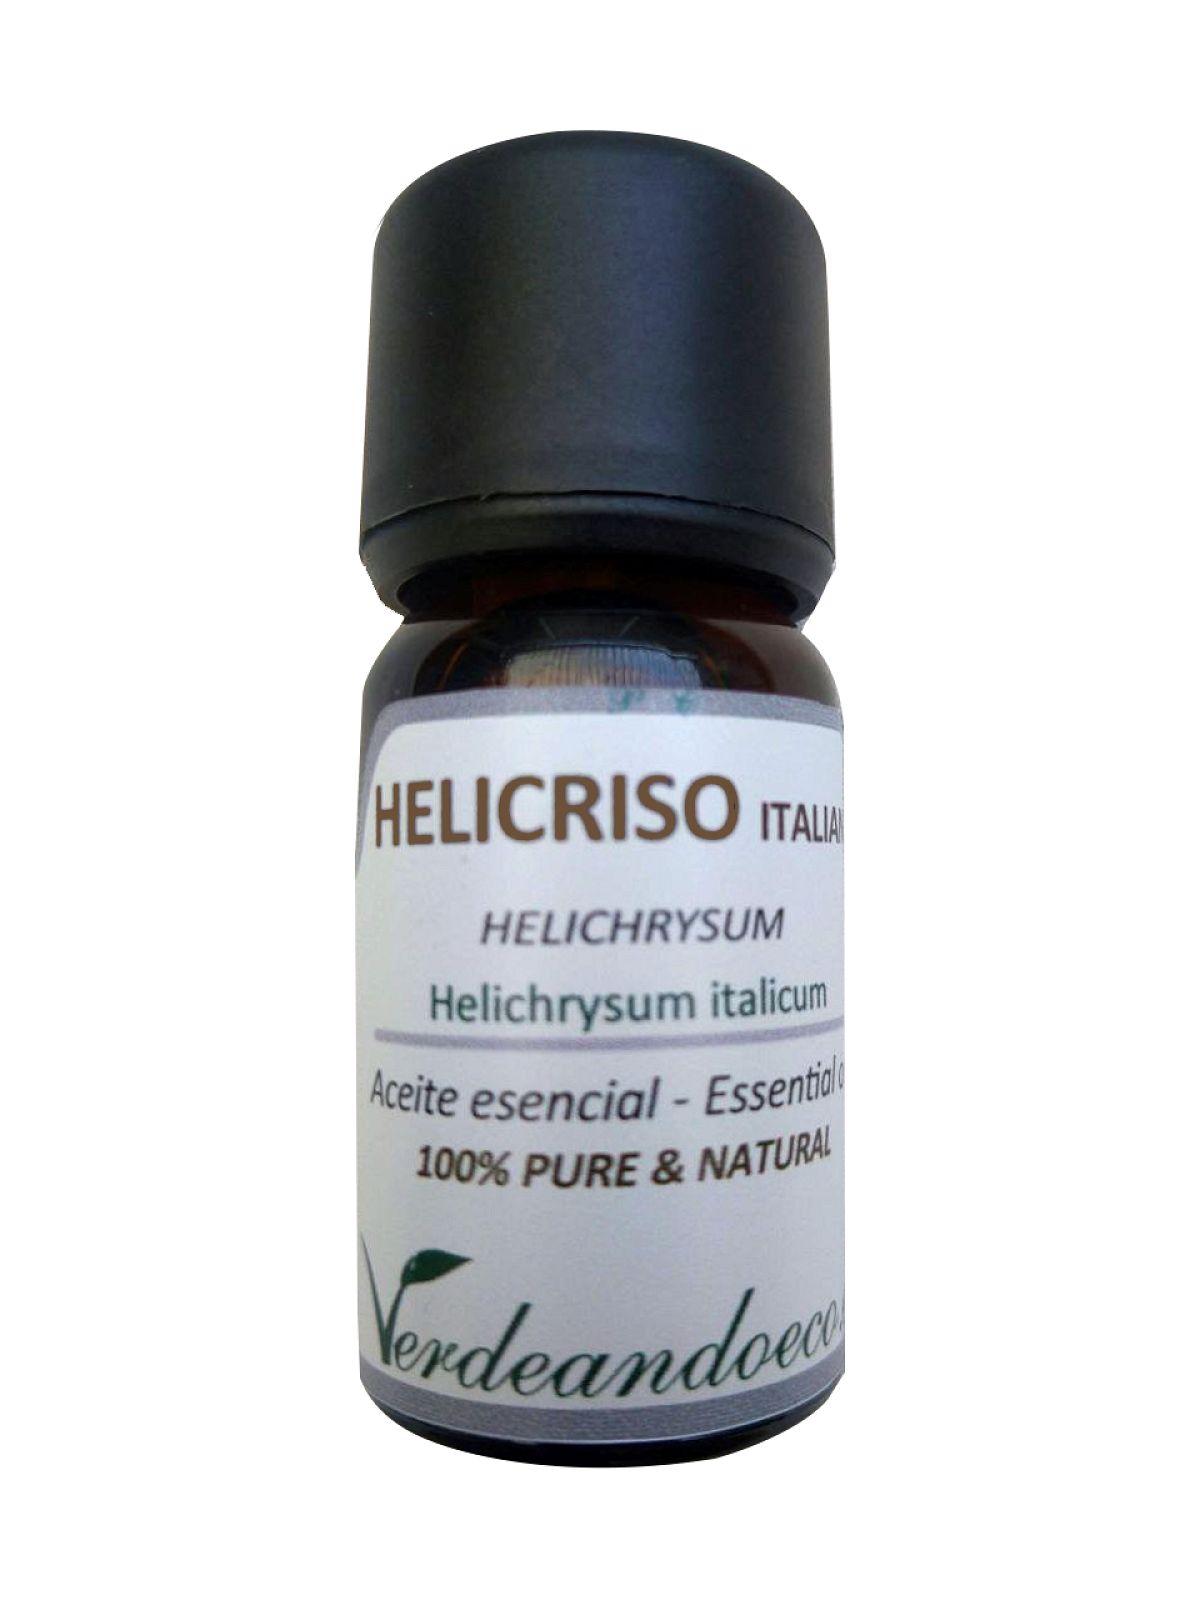 Verdeandoeco - Helicriso Italiano  10ml